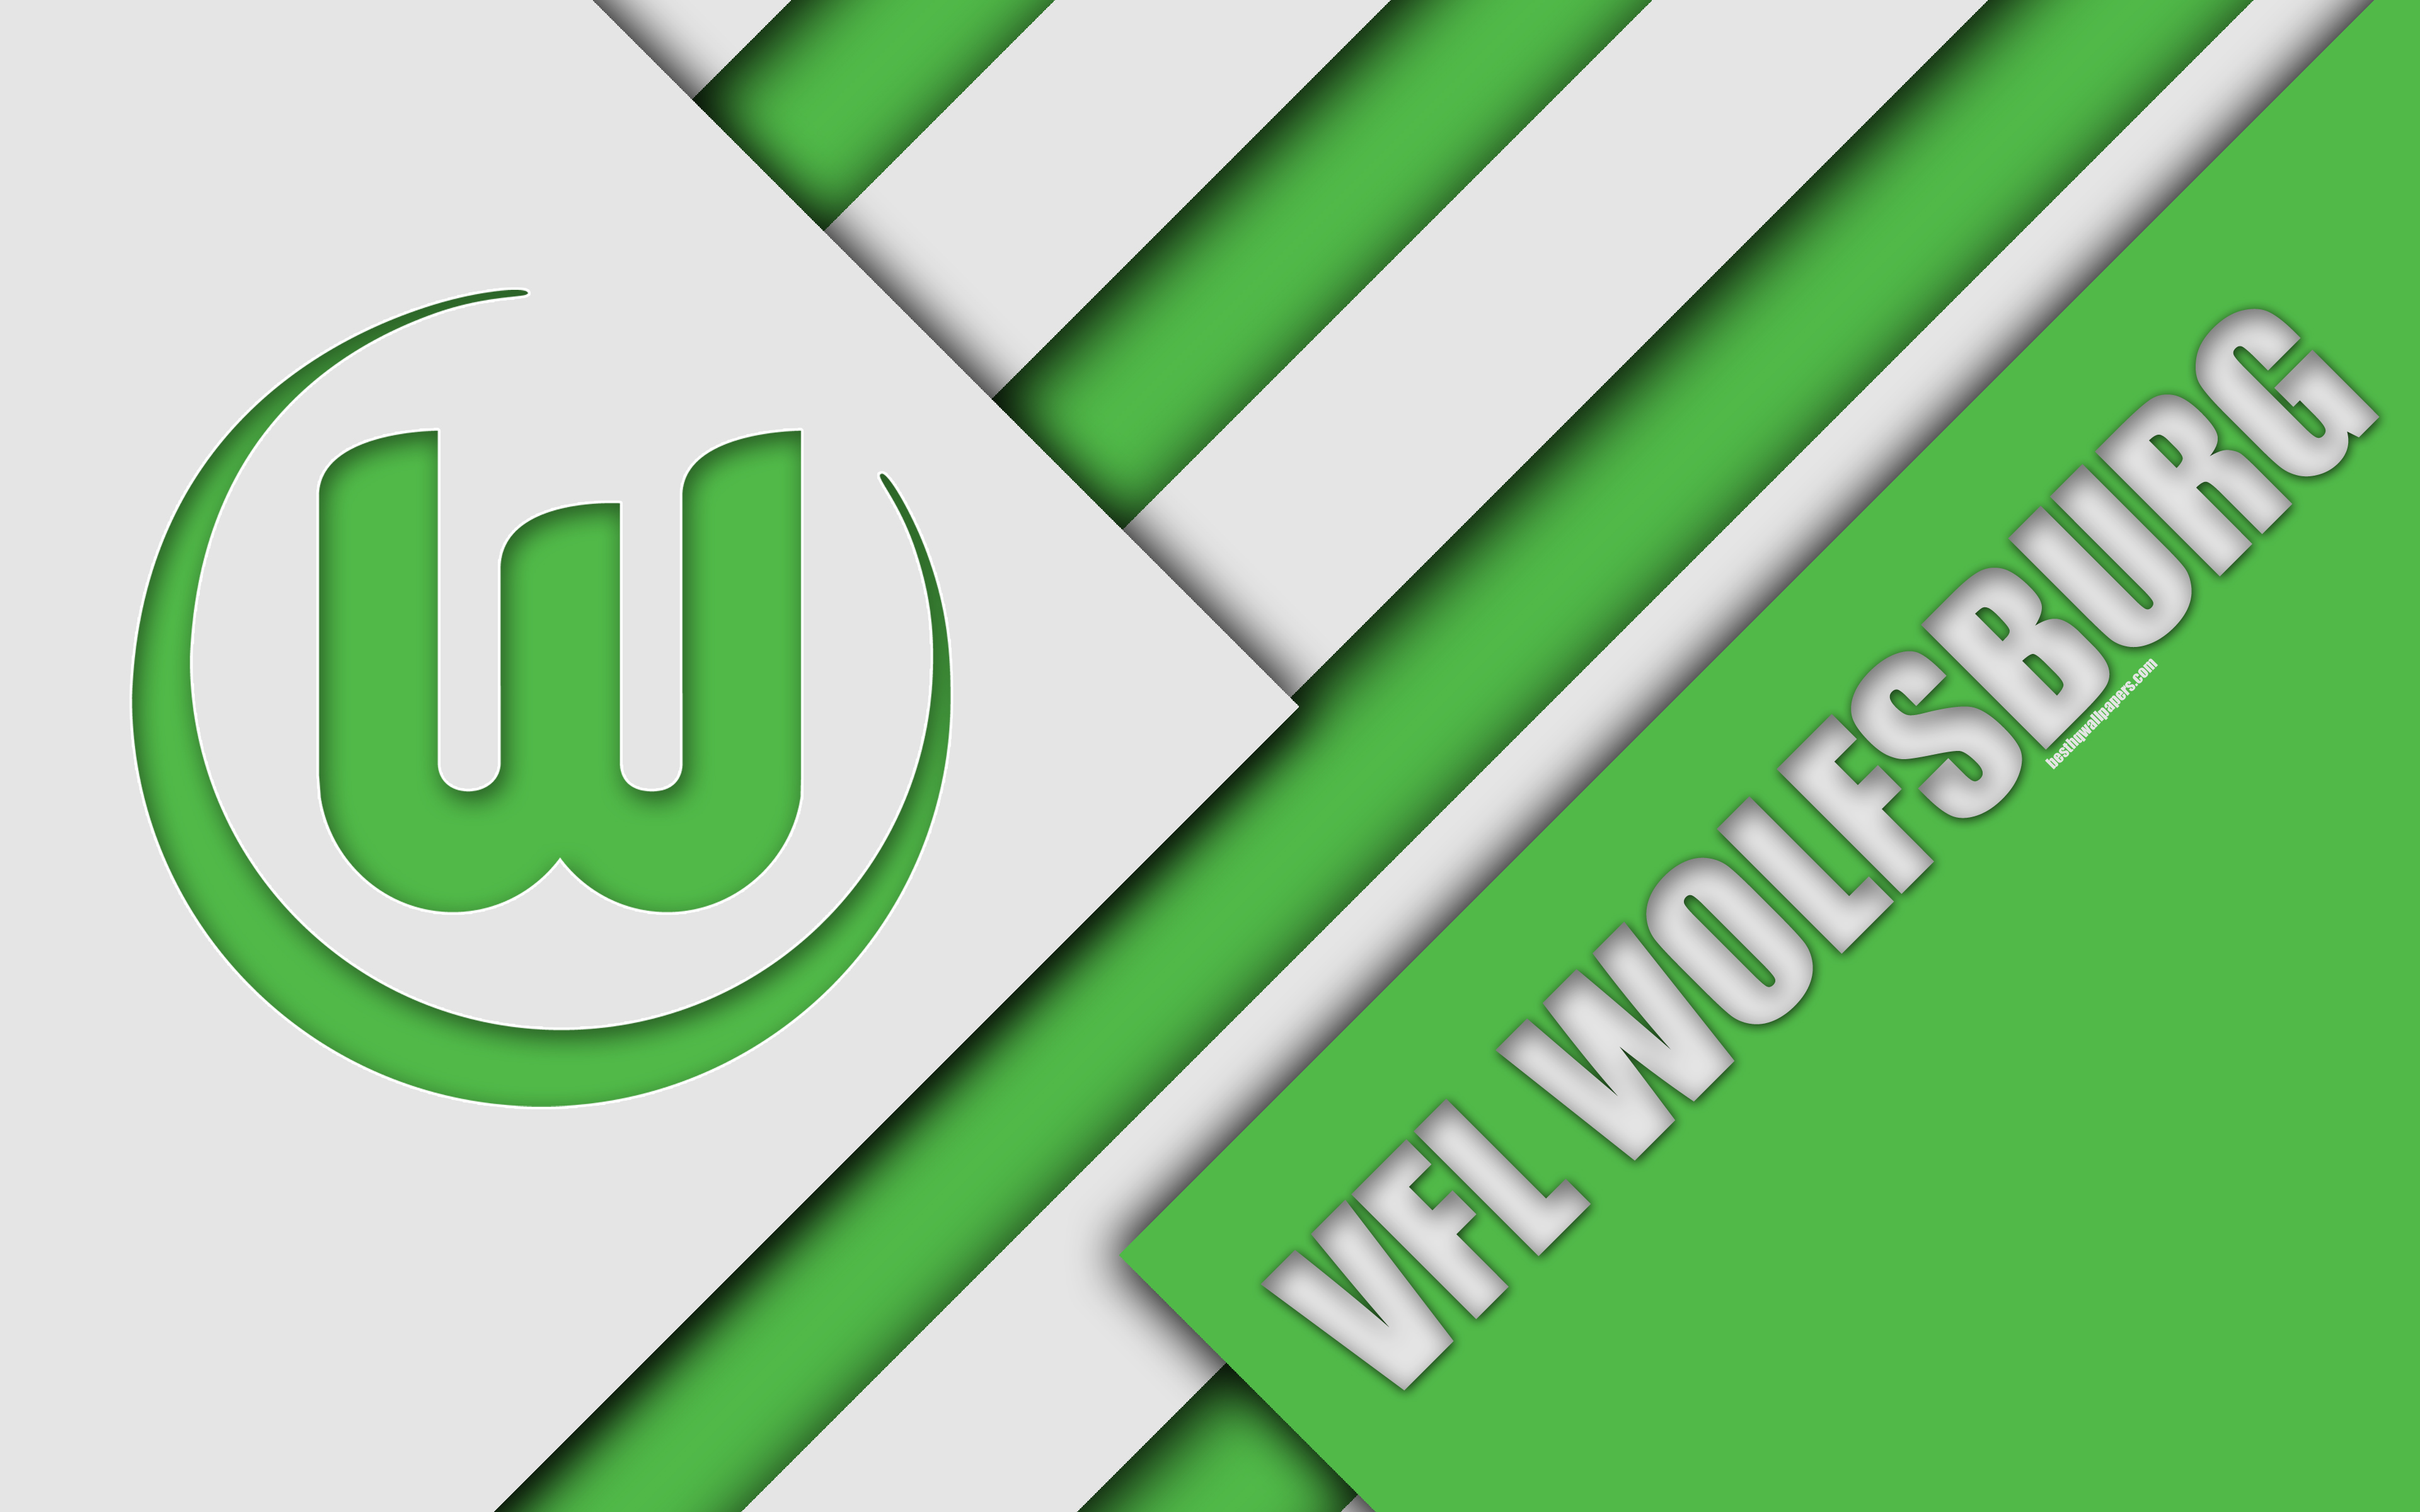 Download wallpaper VfL Wolfsburg FC, 4k, material design, emblem